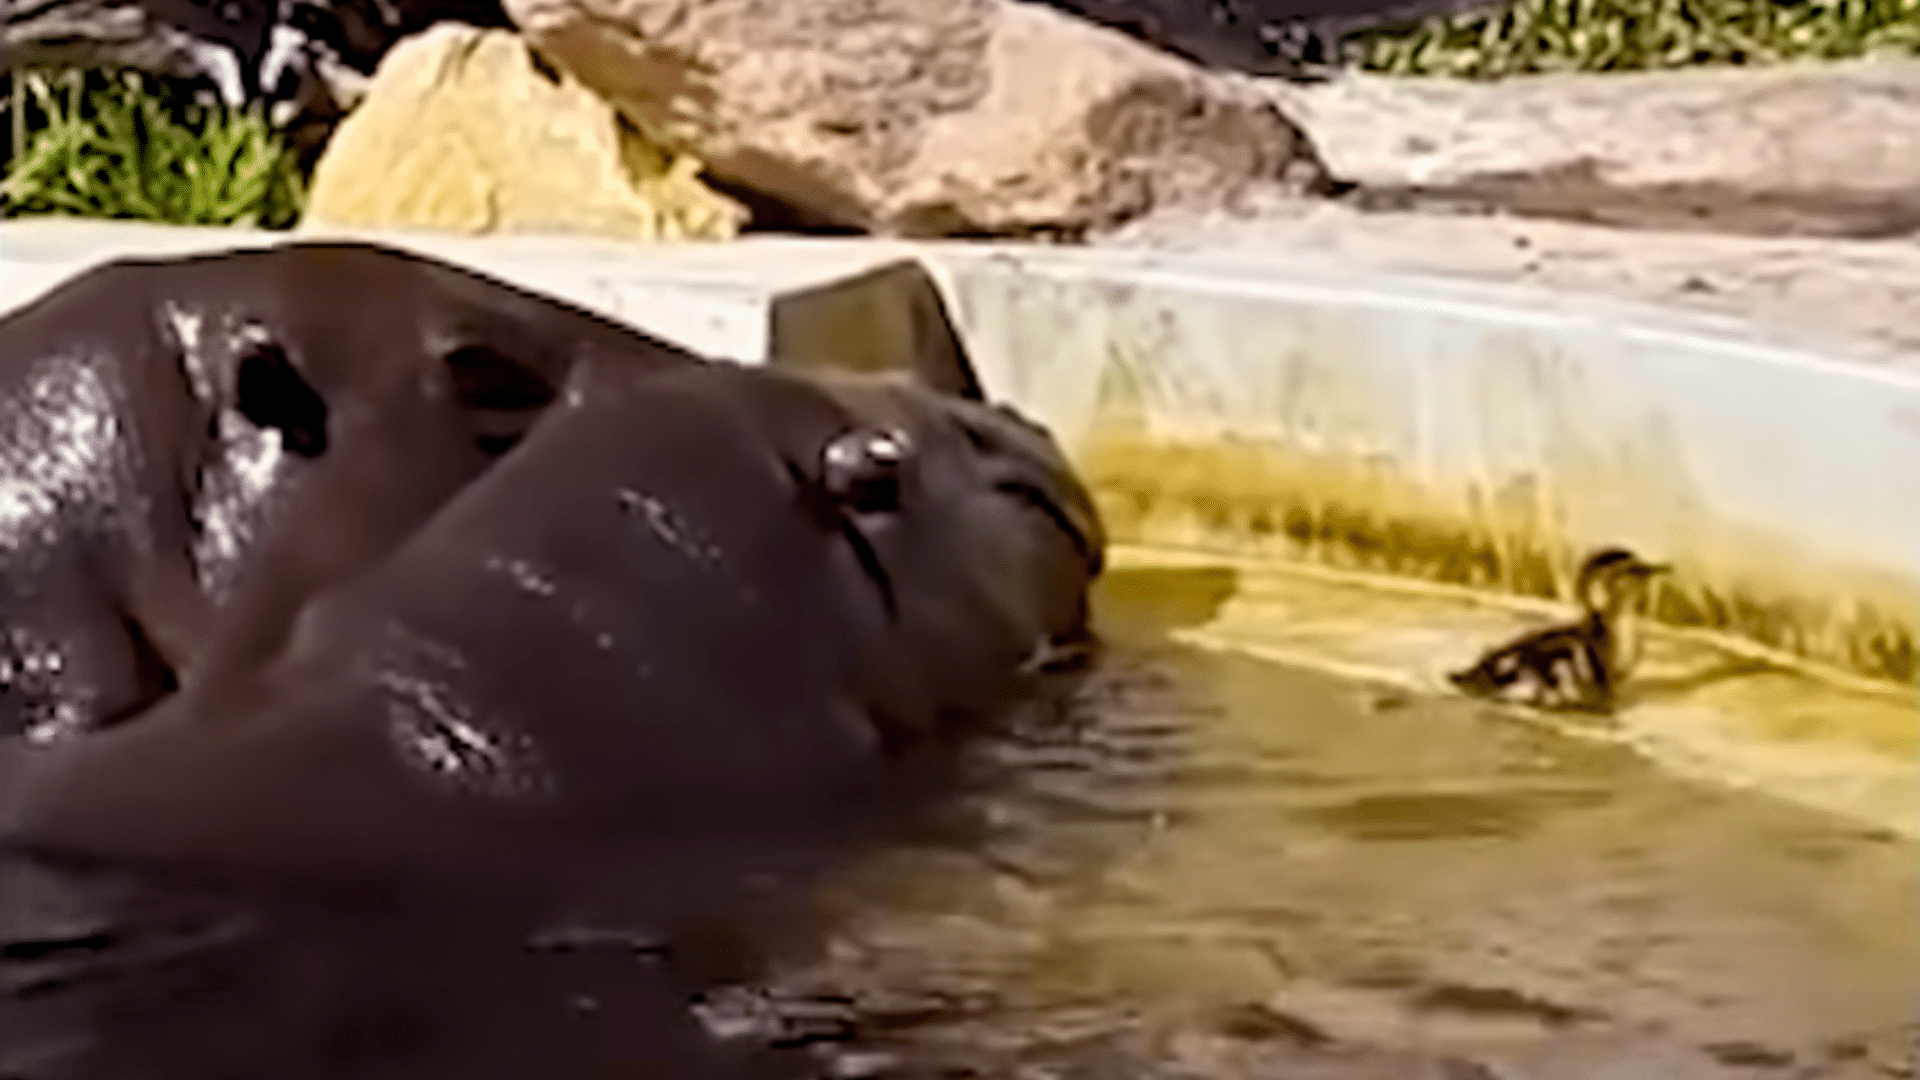 hippos help duckling